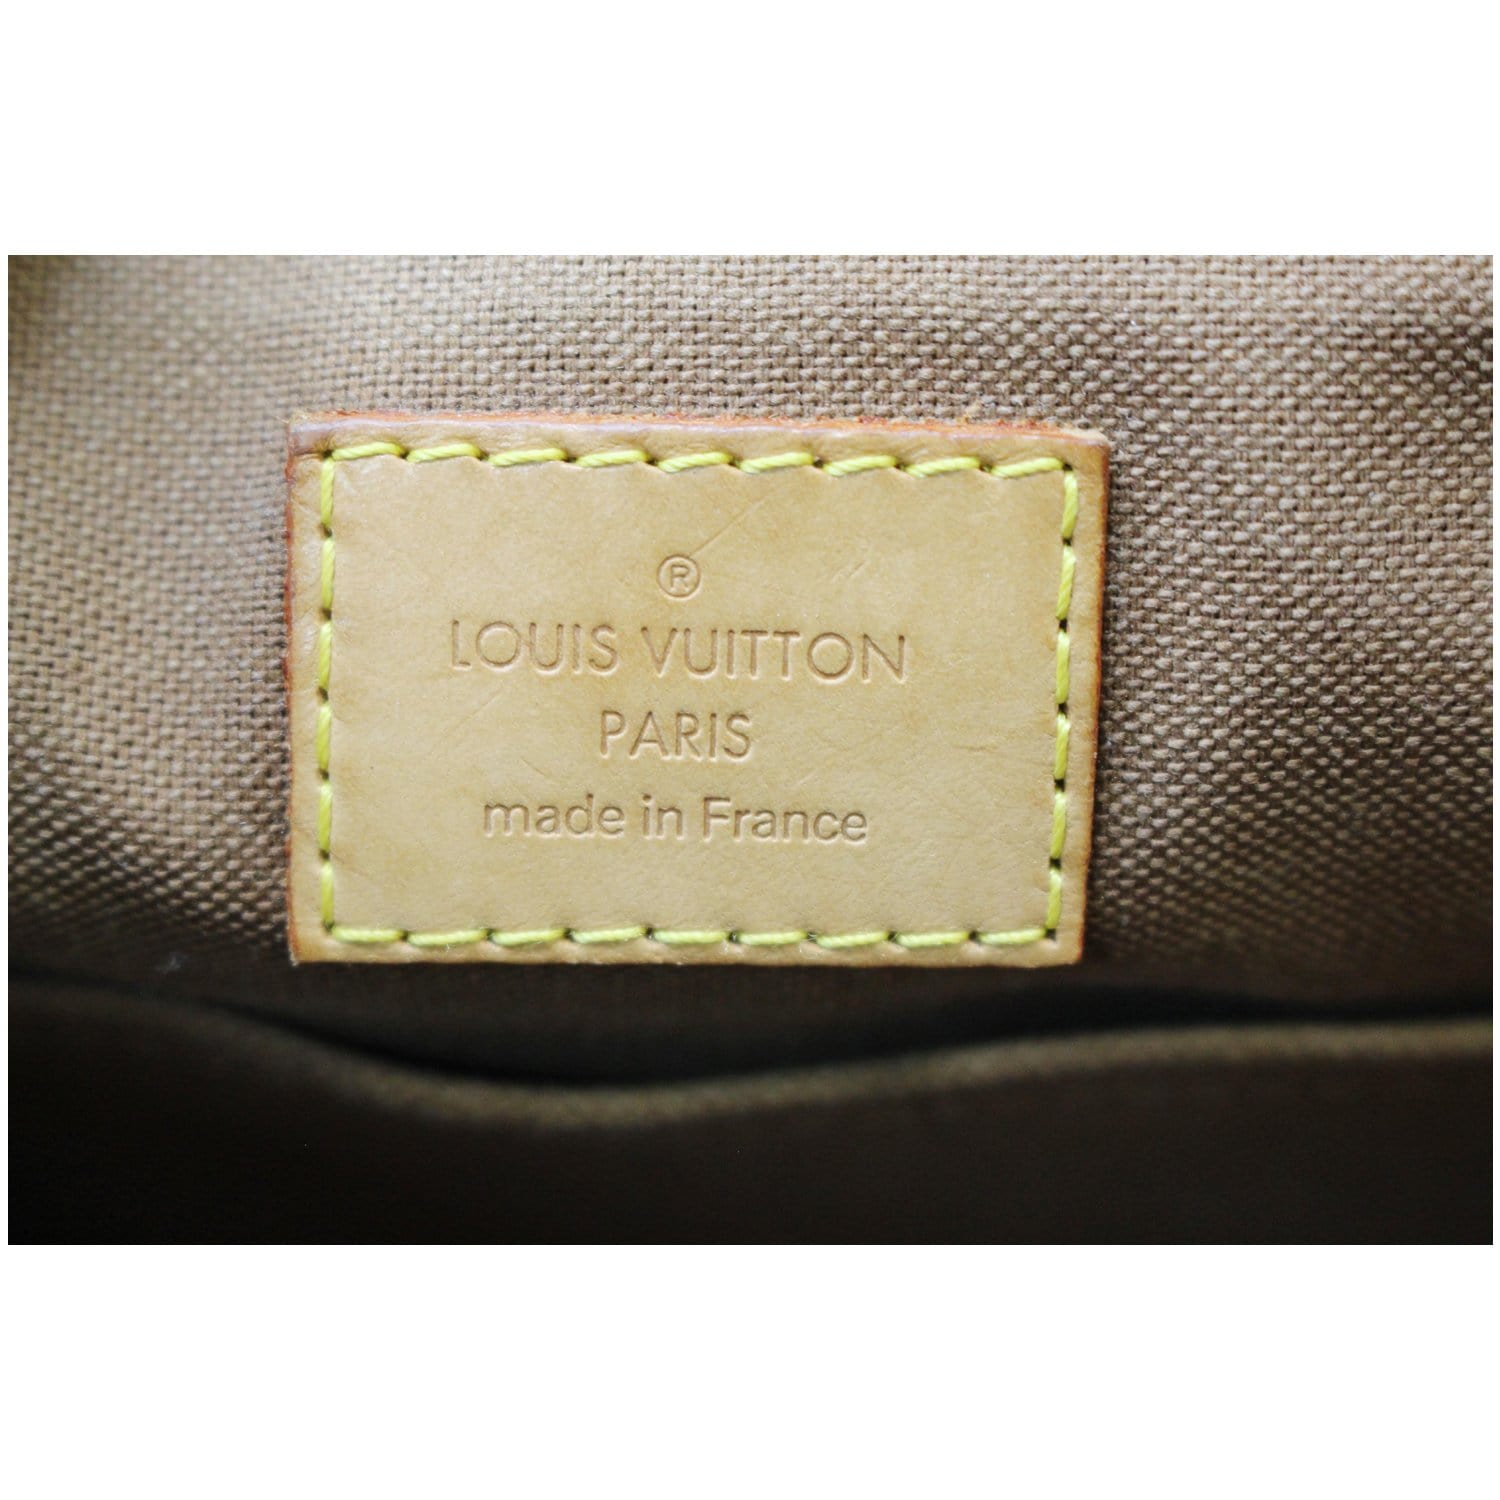 Louis Vuitton Handbag Monogram Popincourt Brown Canvas Women's M40009  Auction